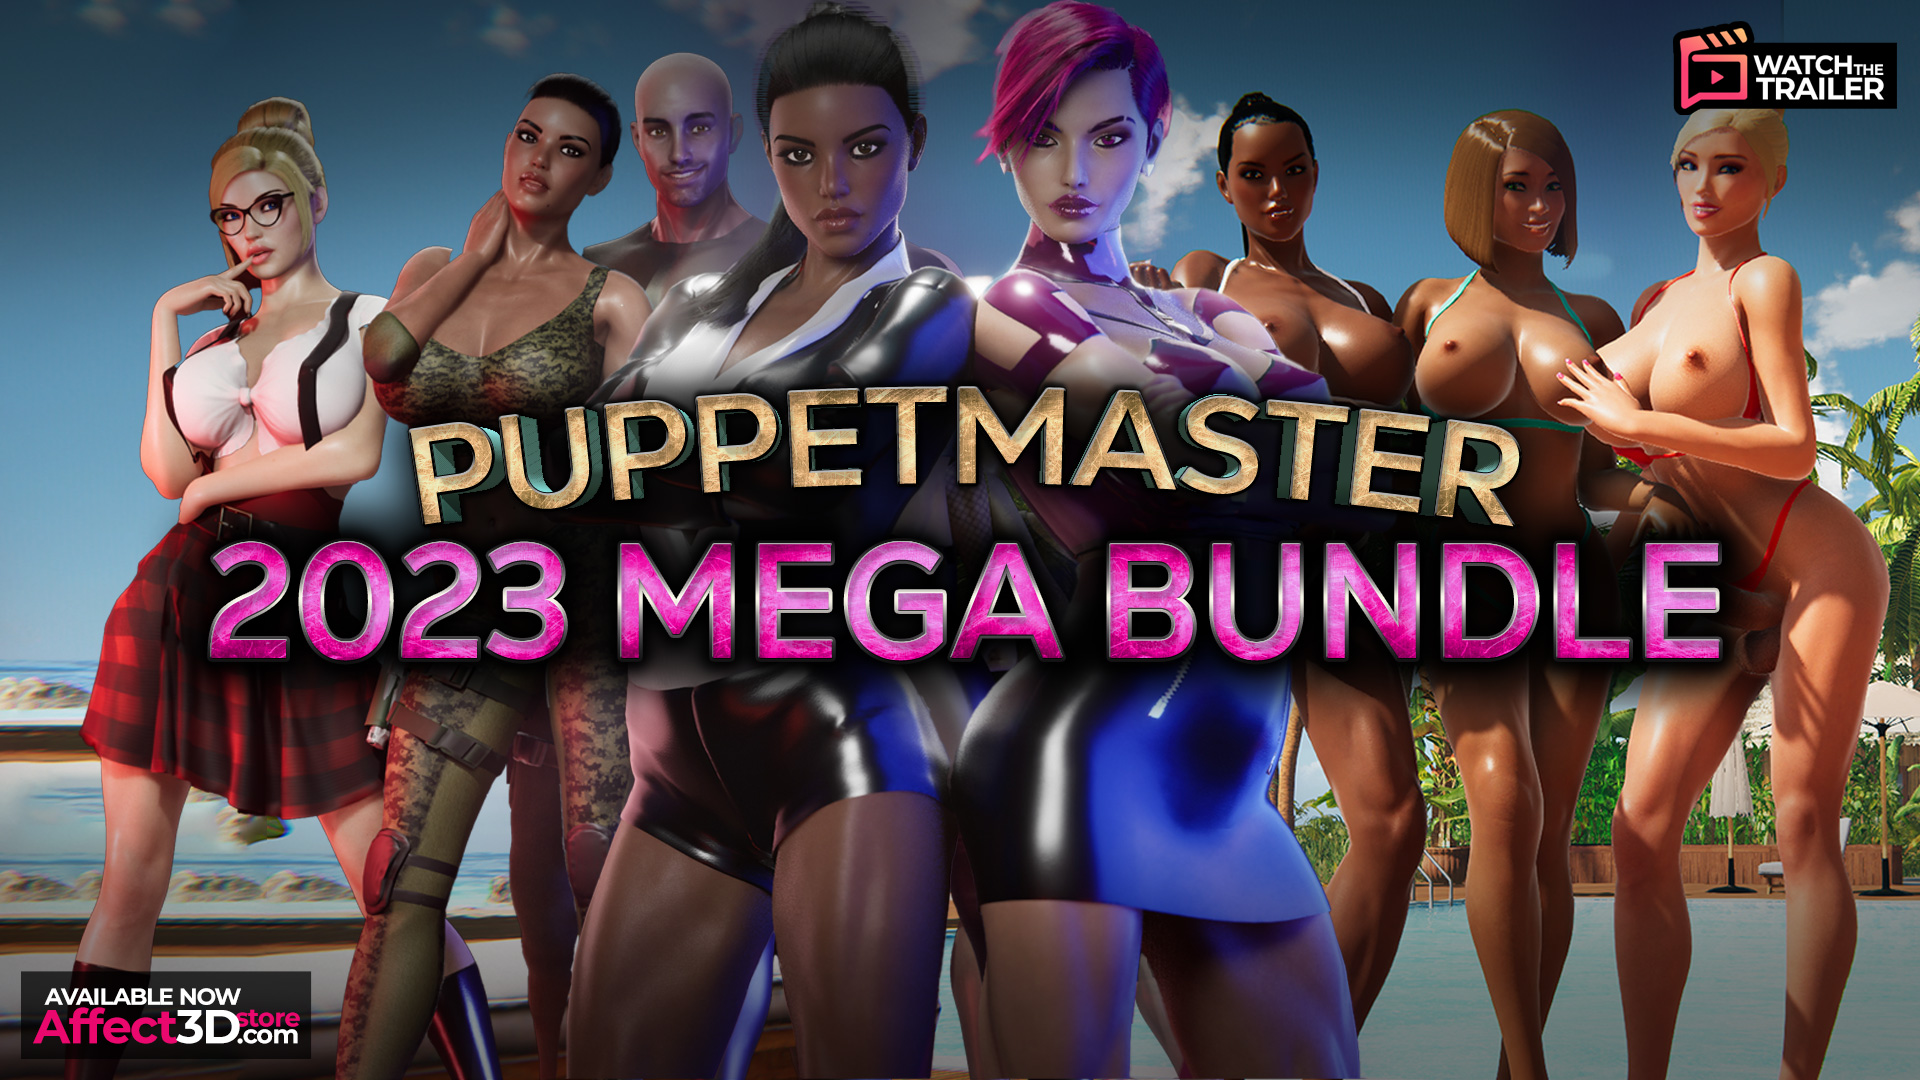 2023 Mega Bundle by Puppetmaster